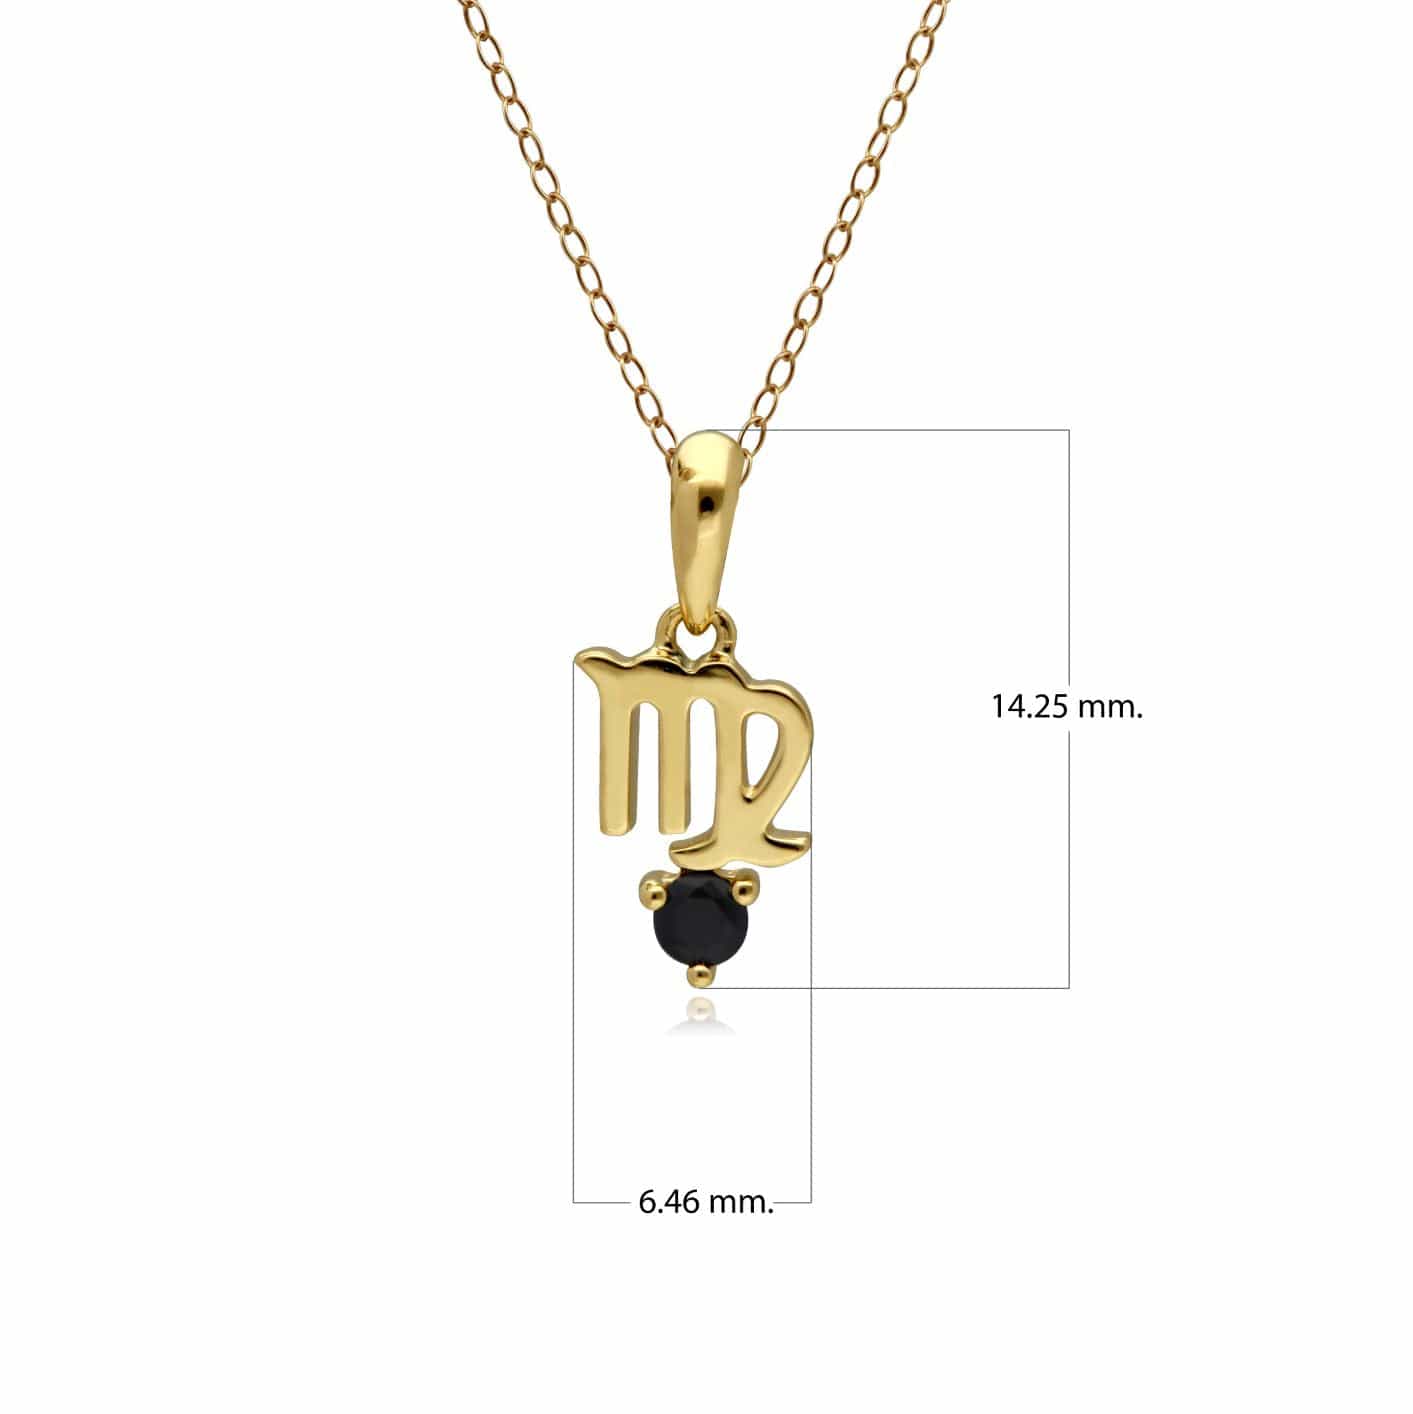 Sapphire Virgo Zodiac Charm Necklace in 9ct Yellow Gold - Gemondo